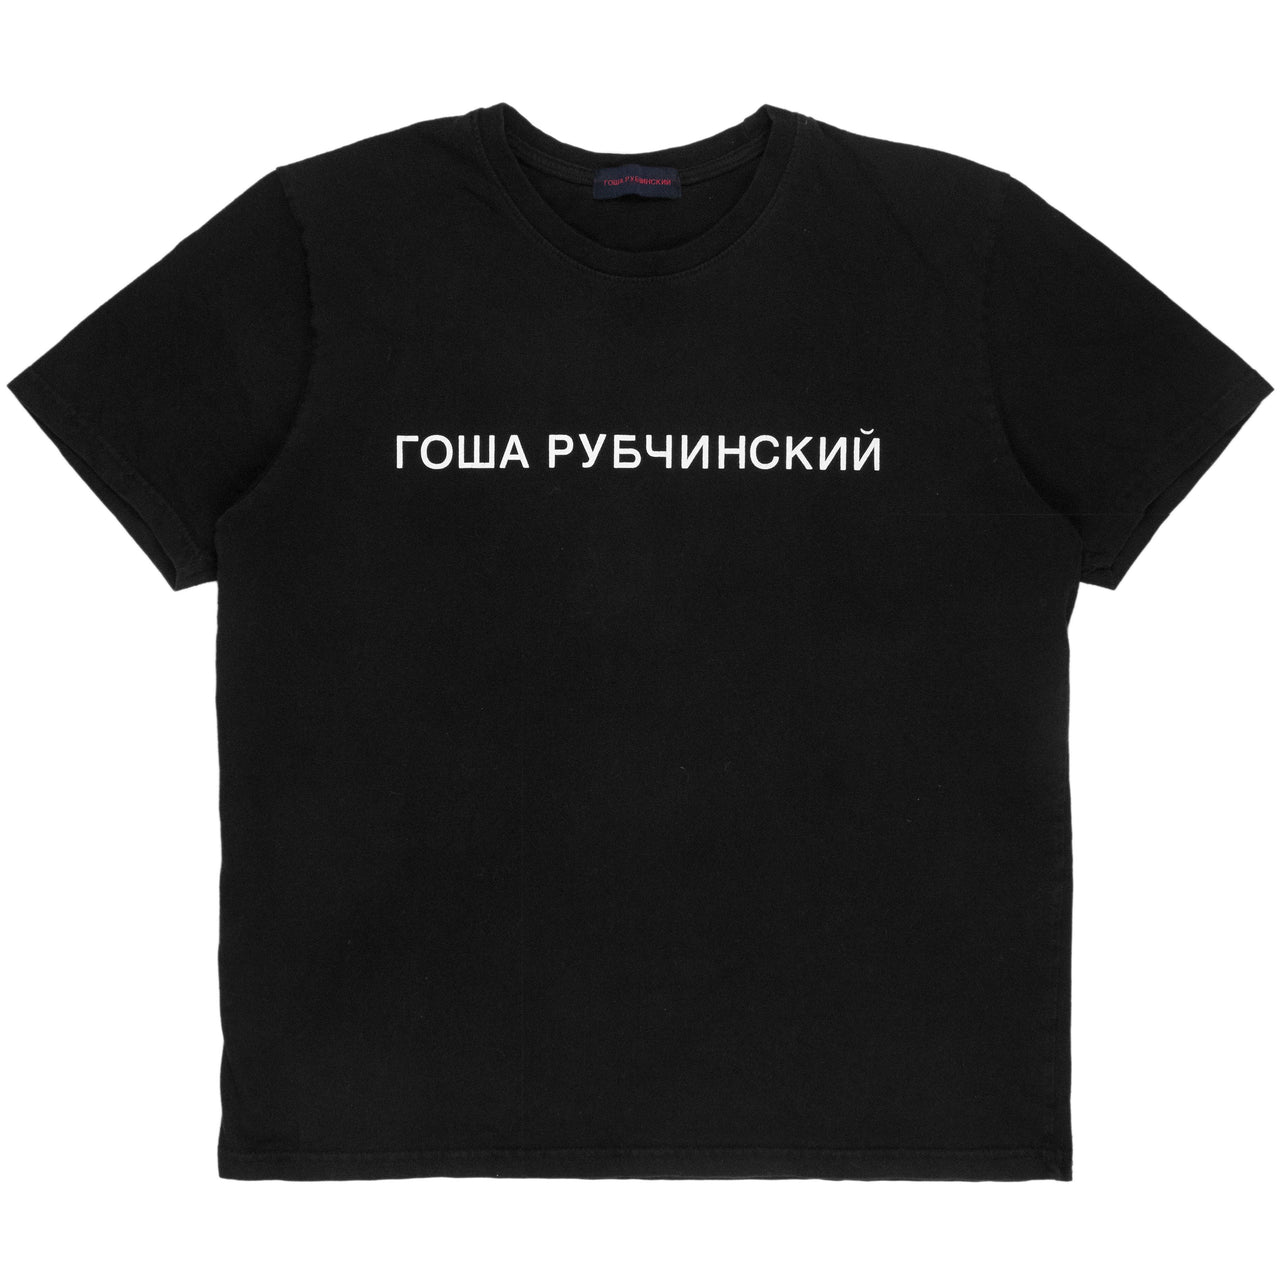 Gosha Rubchinskiy Tee Shirt - SS16